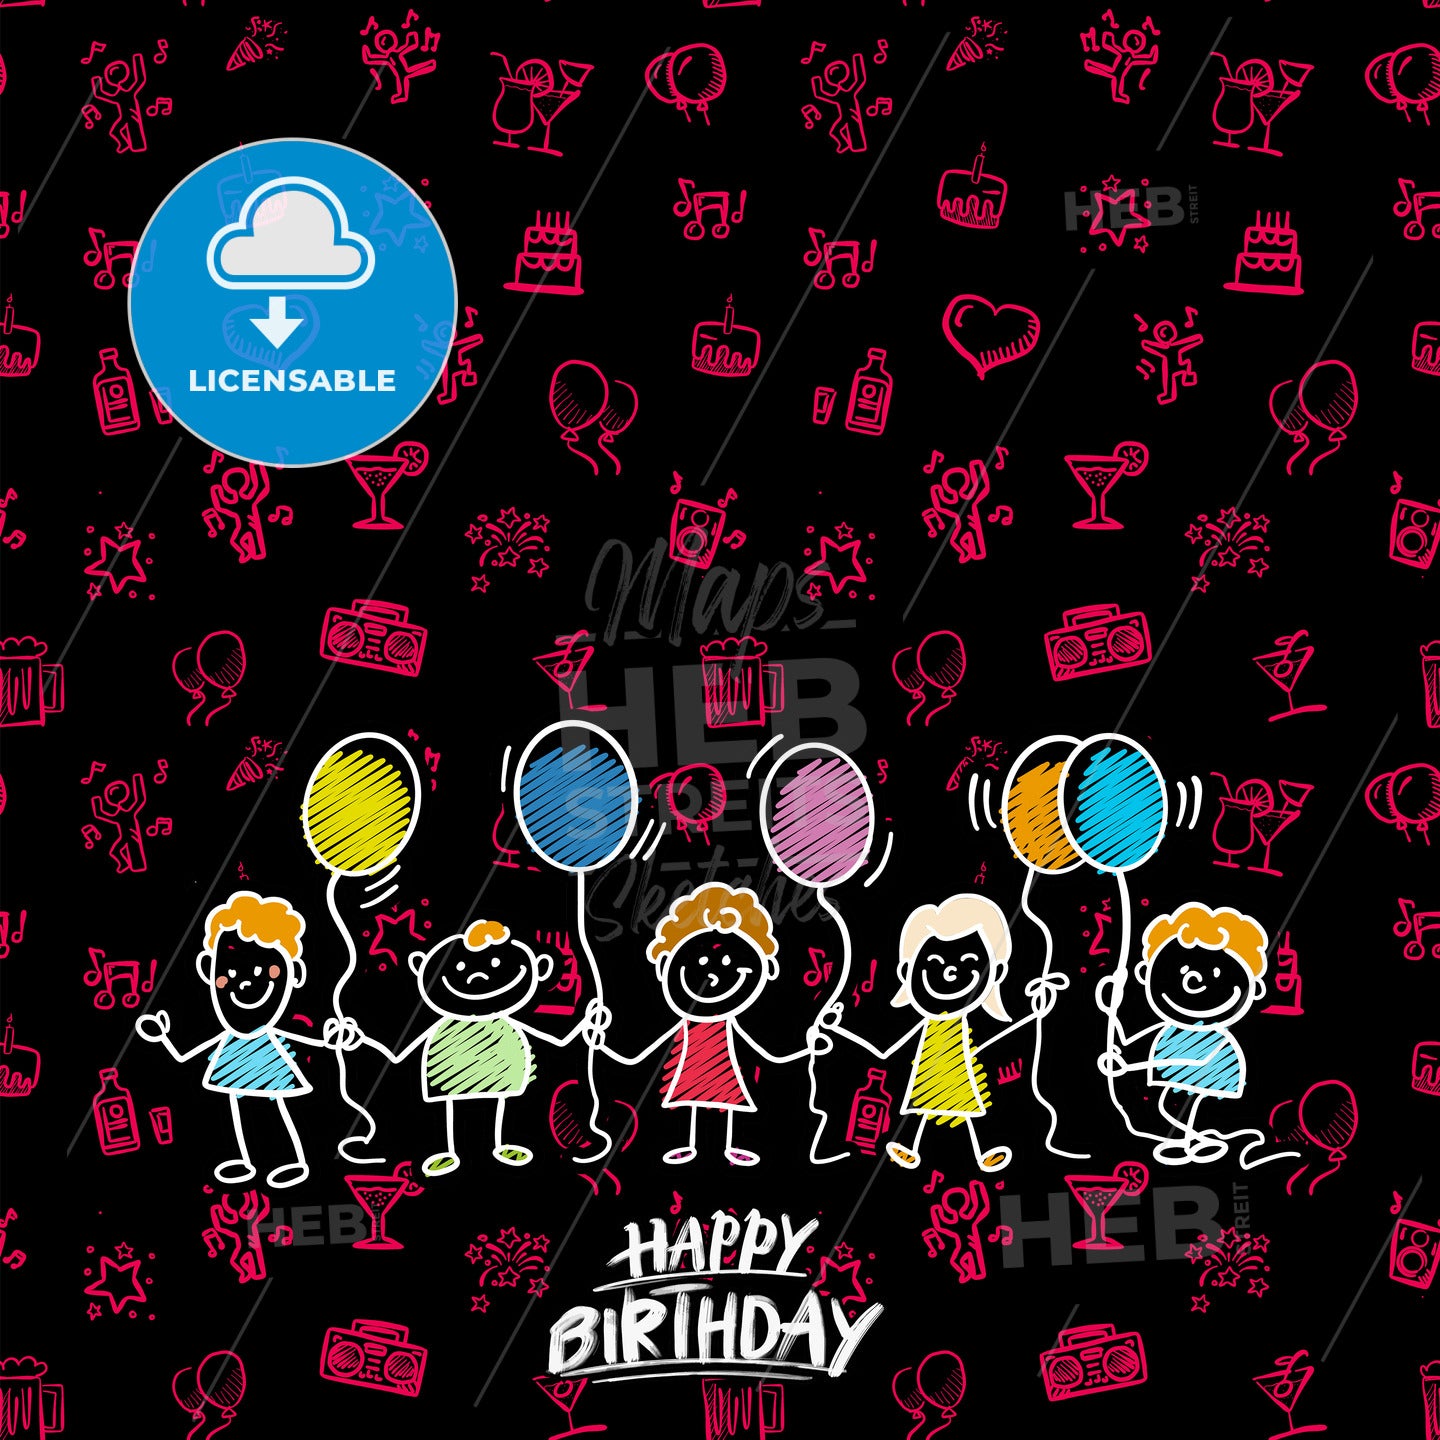 Happy birthday doodles background – instant download